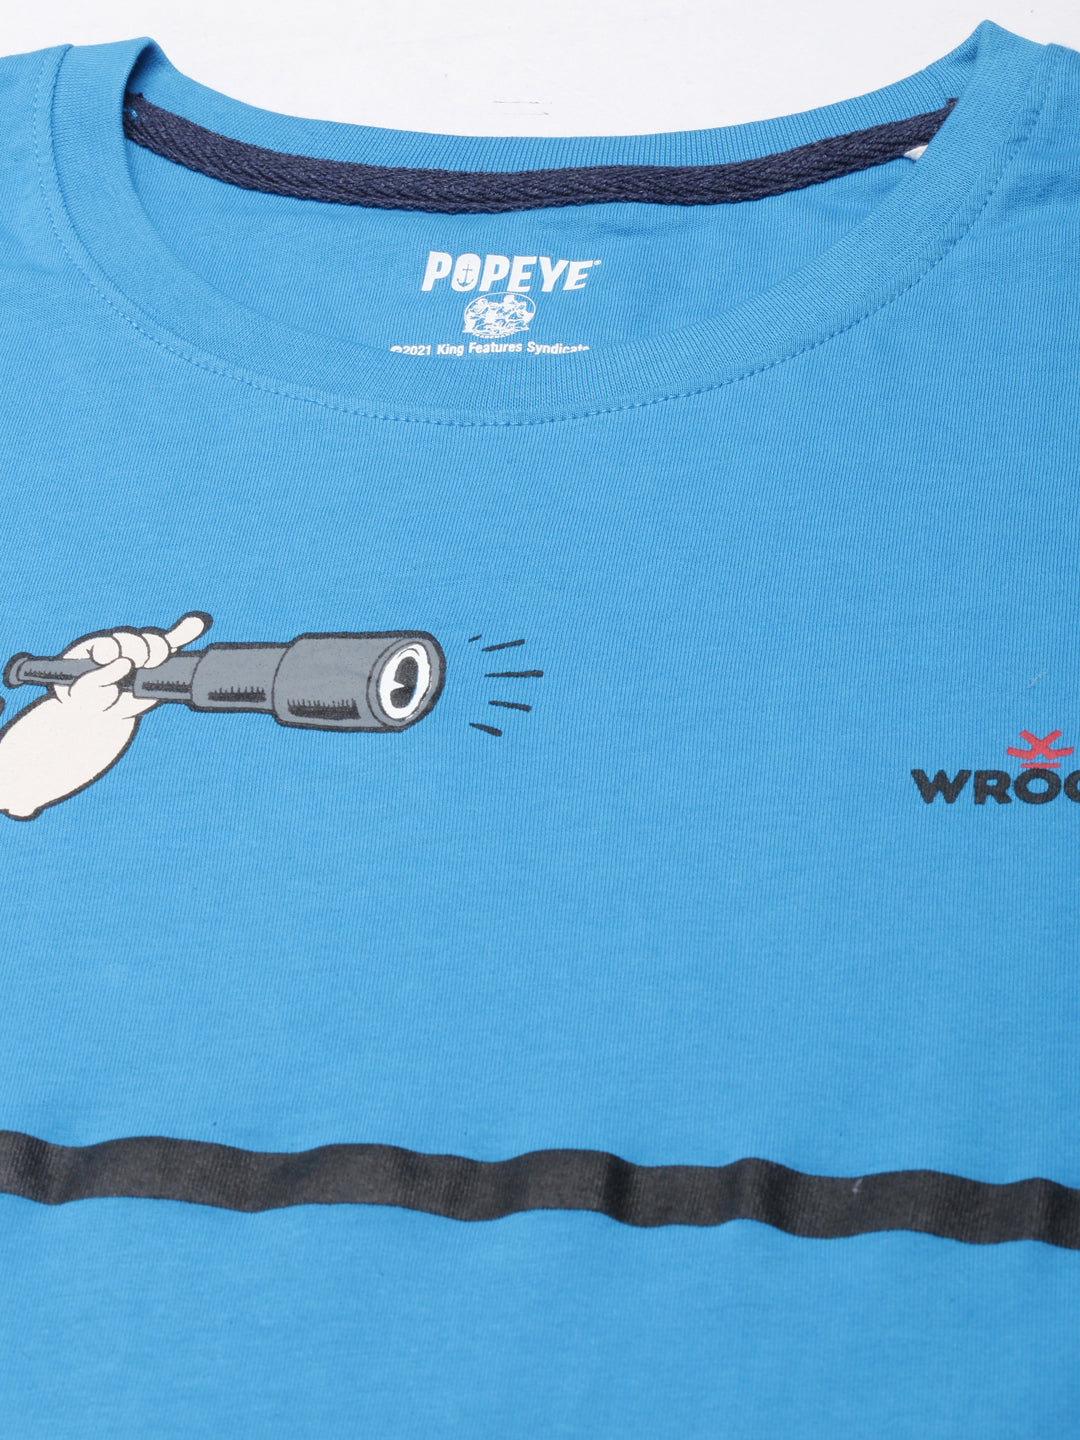 Printed Popeye Blue T-Shirt